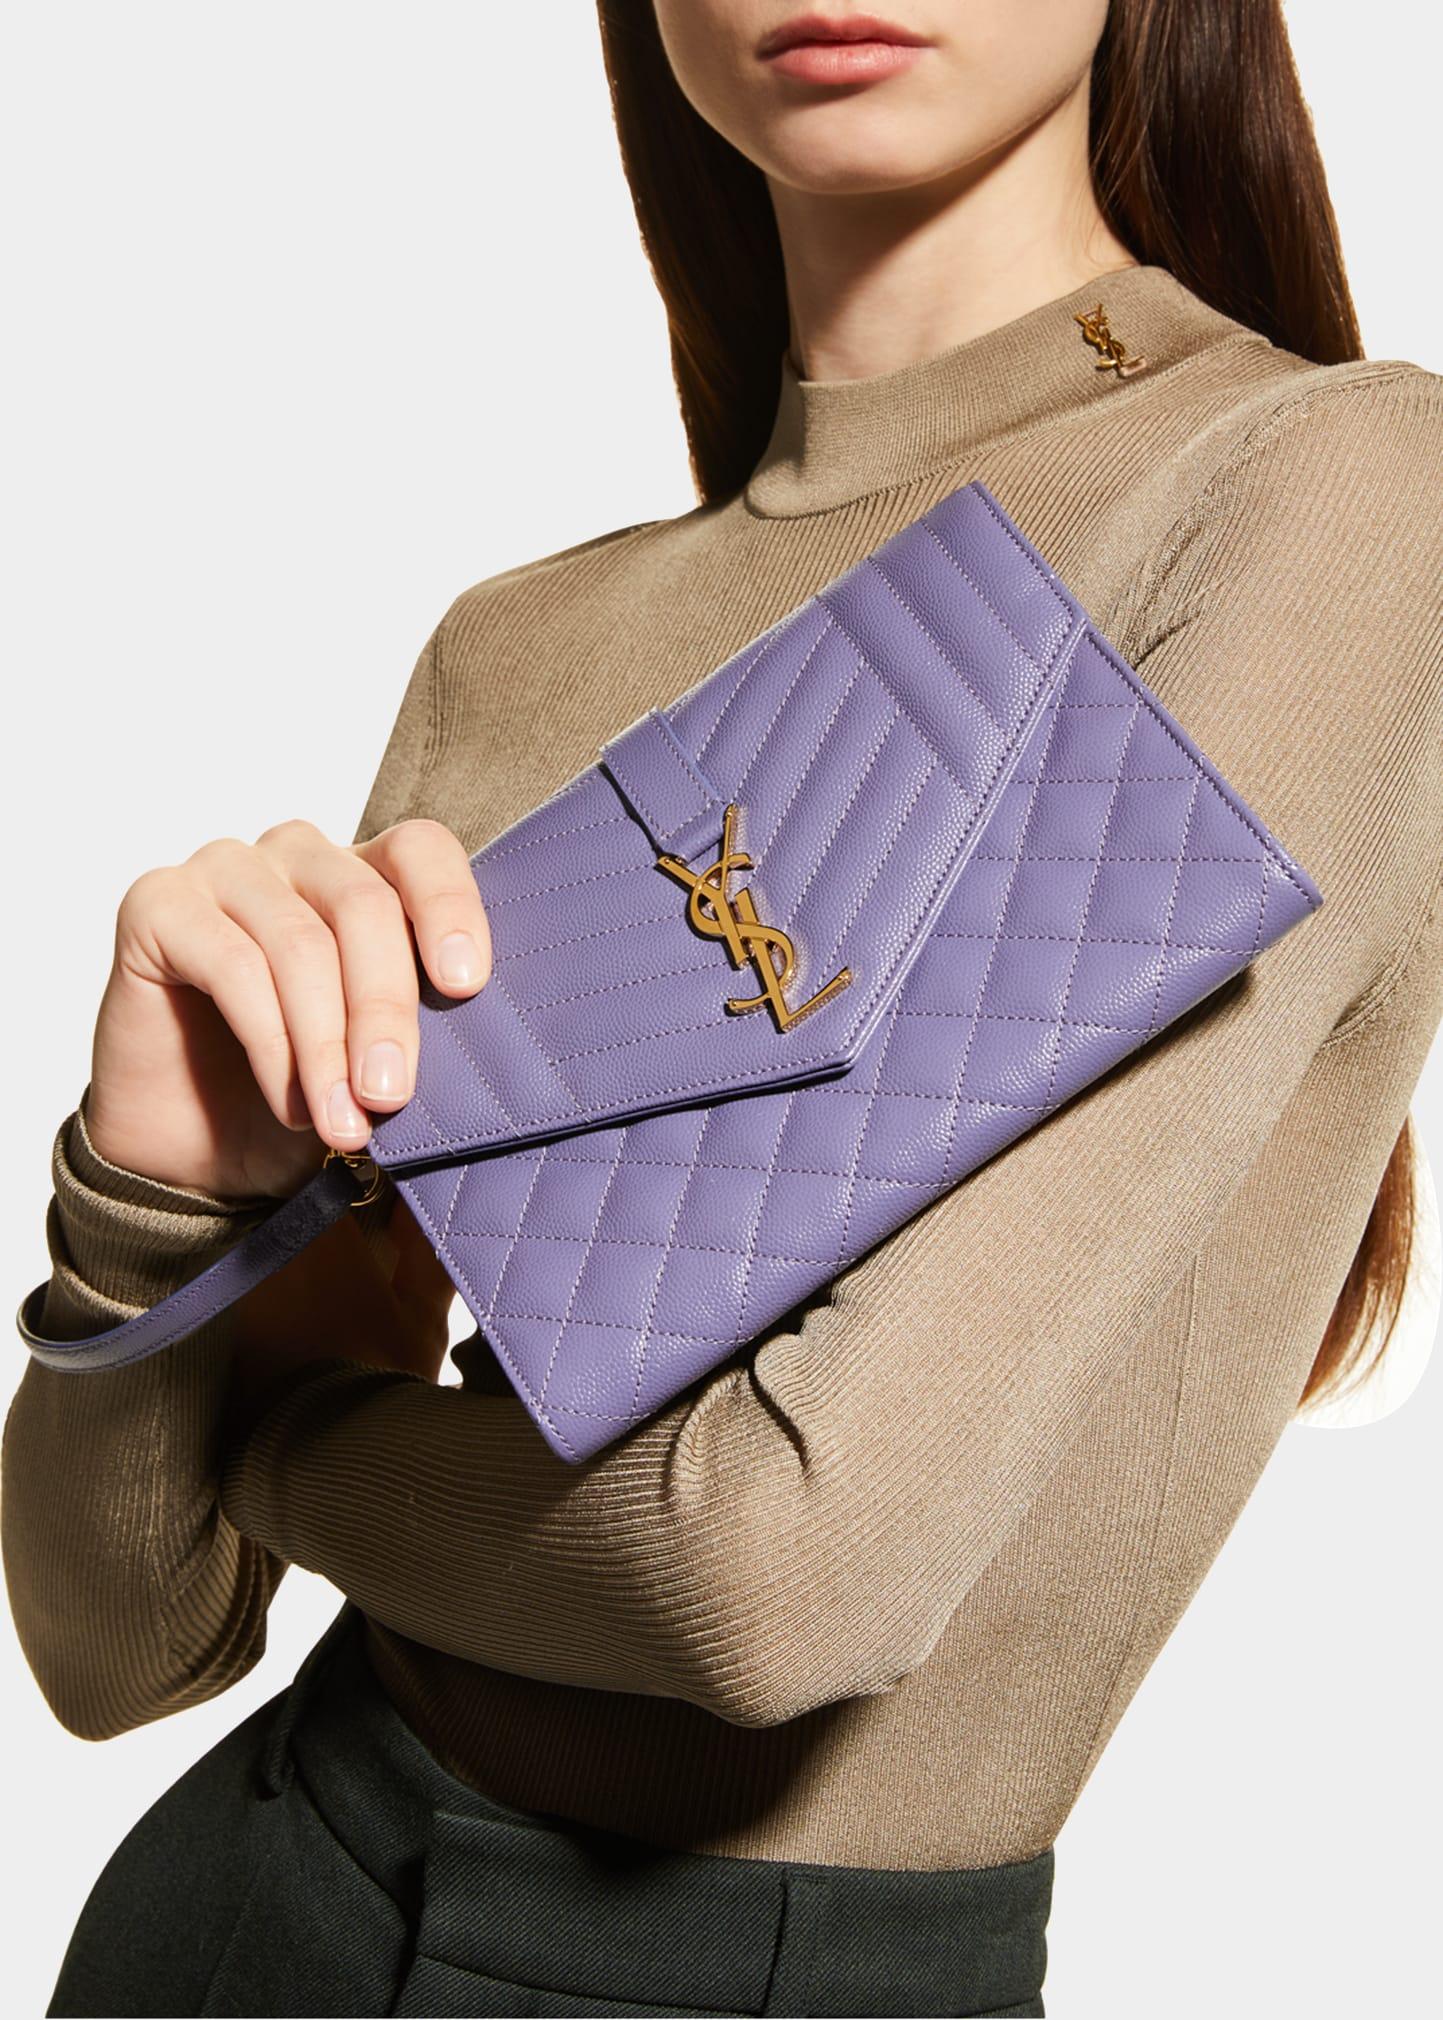 Saint Laurent Ysl Monogram Quilted Envelope Clutch Bag in Purple